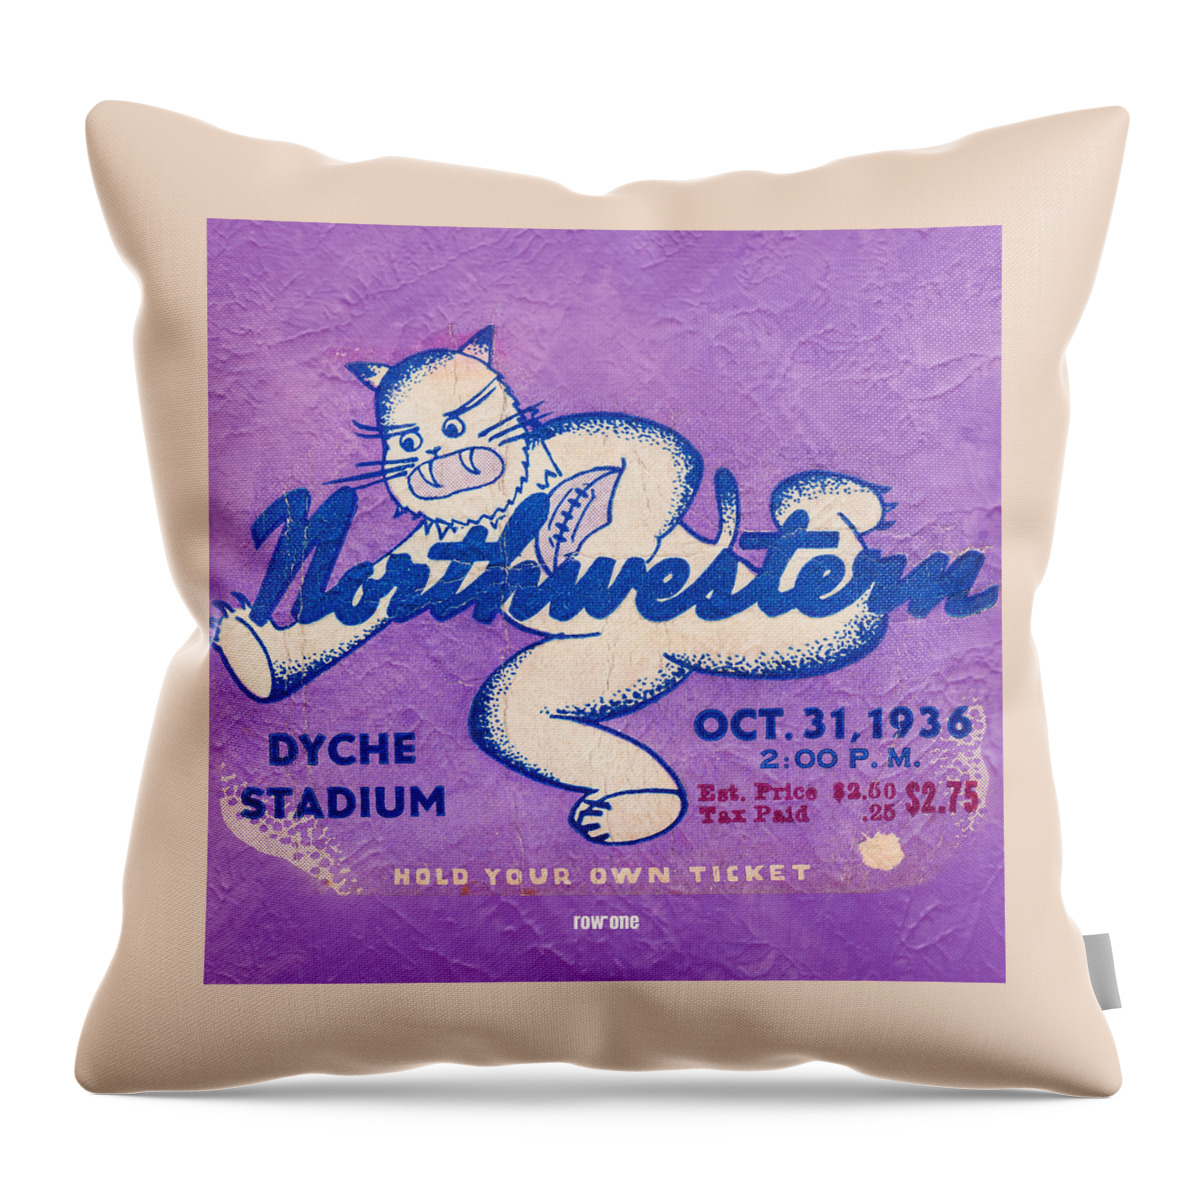 Northwestern University Throw Pillow featuring the mixed media 1936 Minnesota vs. Northwestern by Row One Brand